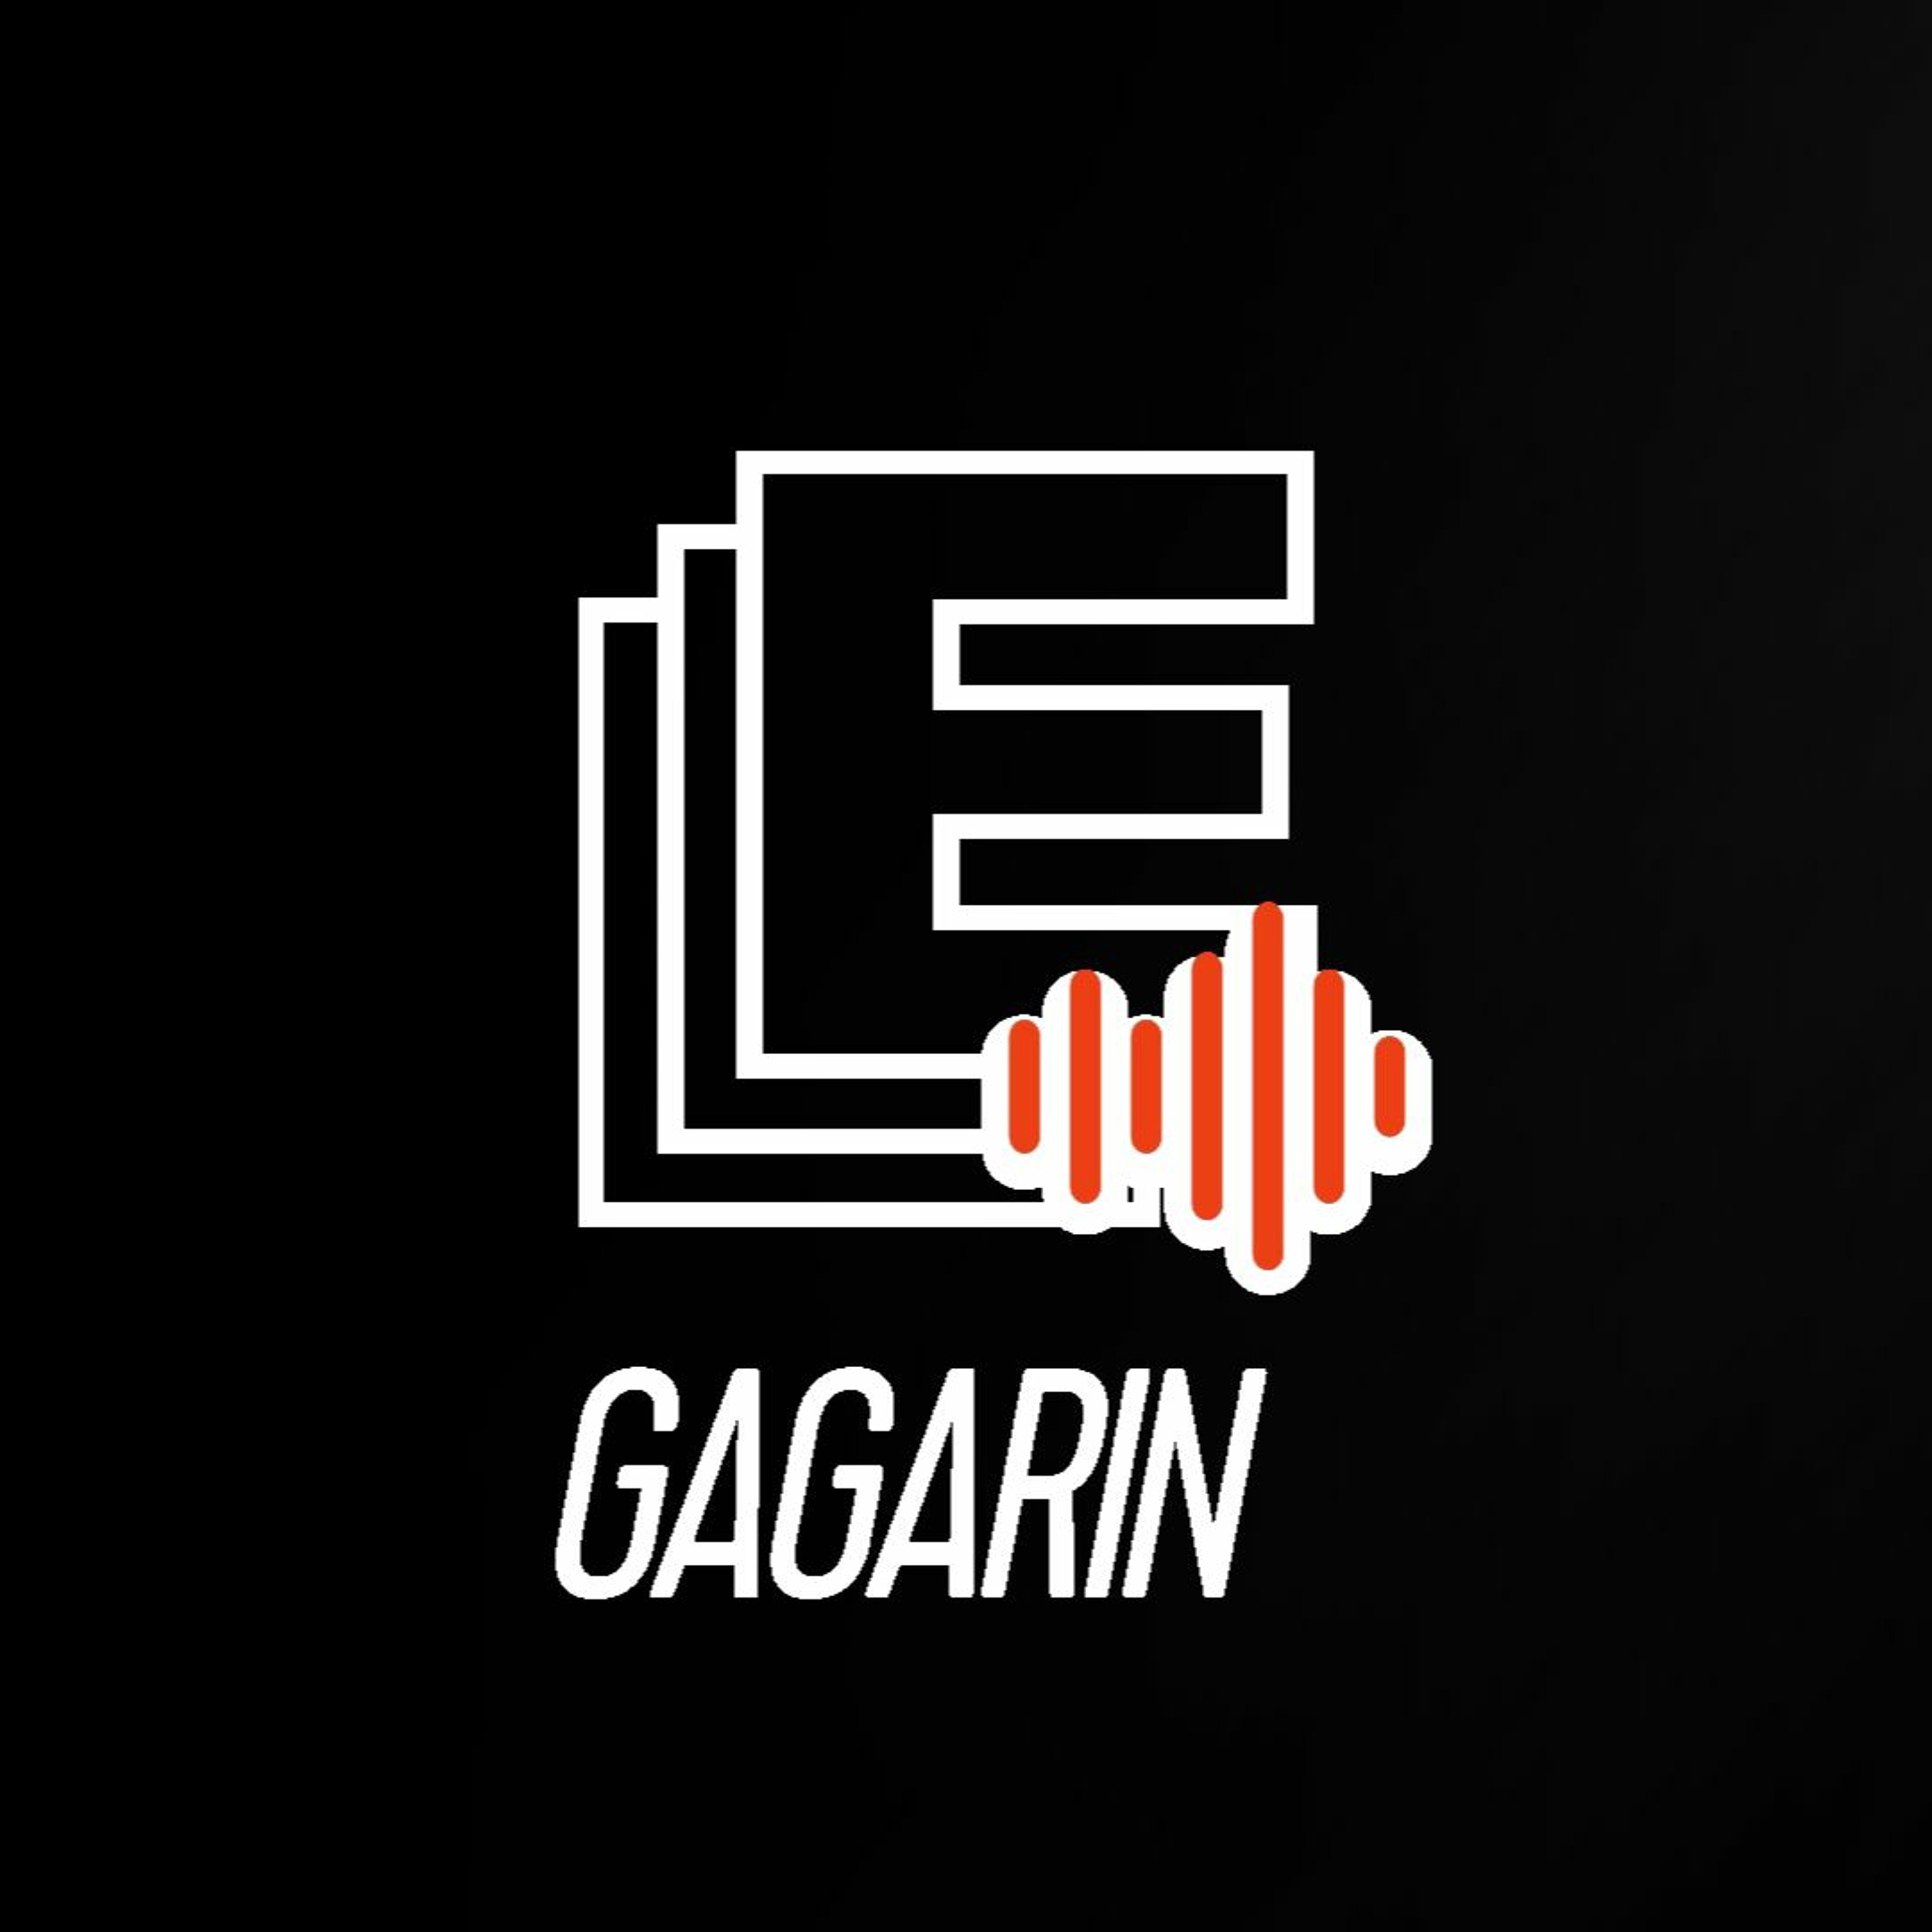 Introducing Gagarin, the Eurozine podcast